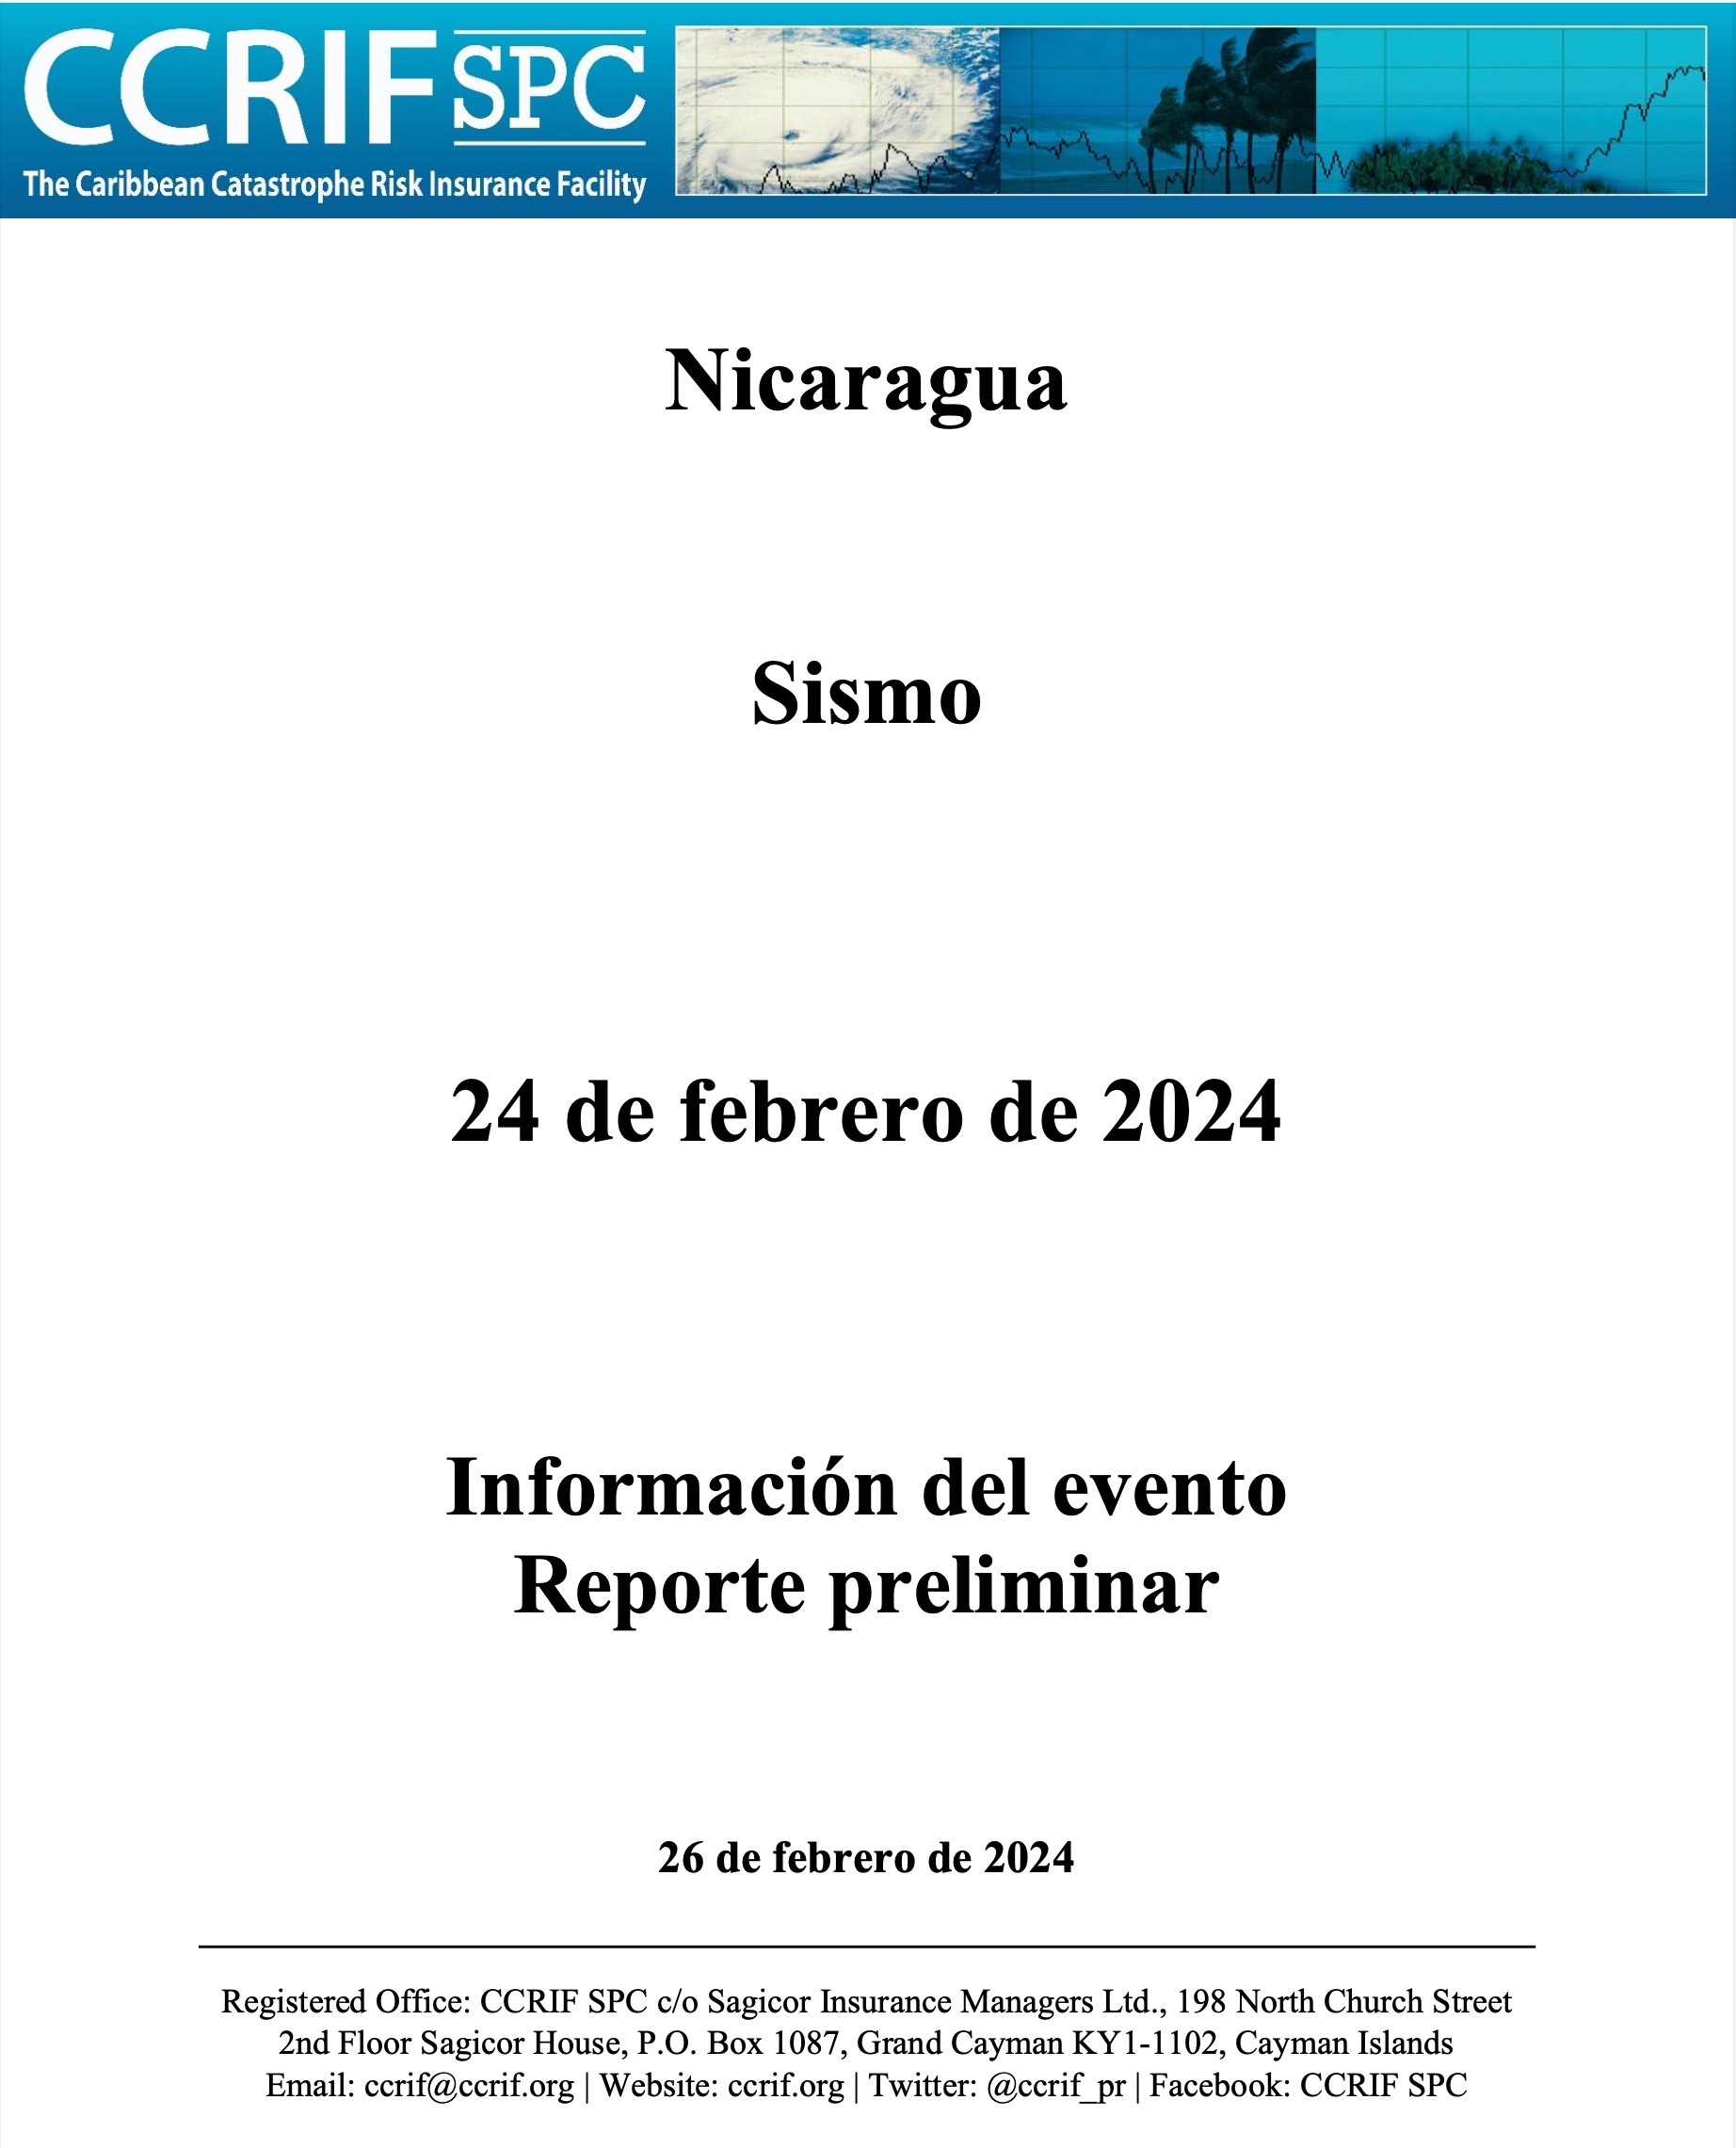 Información del evento Reporte preliminar - Sismo - Nicargua - 24 de febrero de 2024